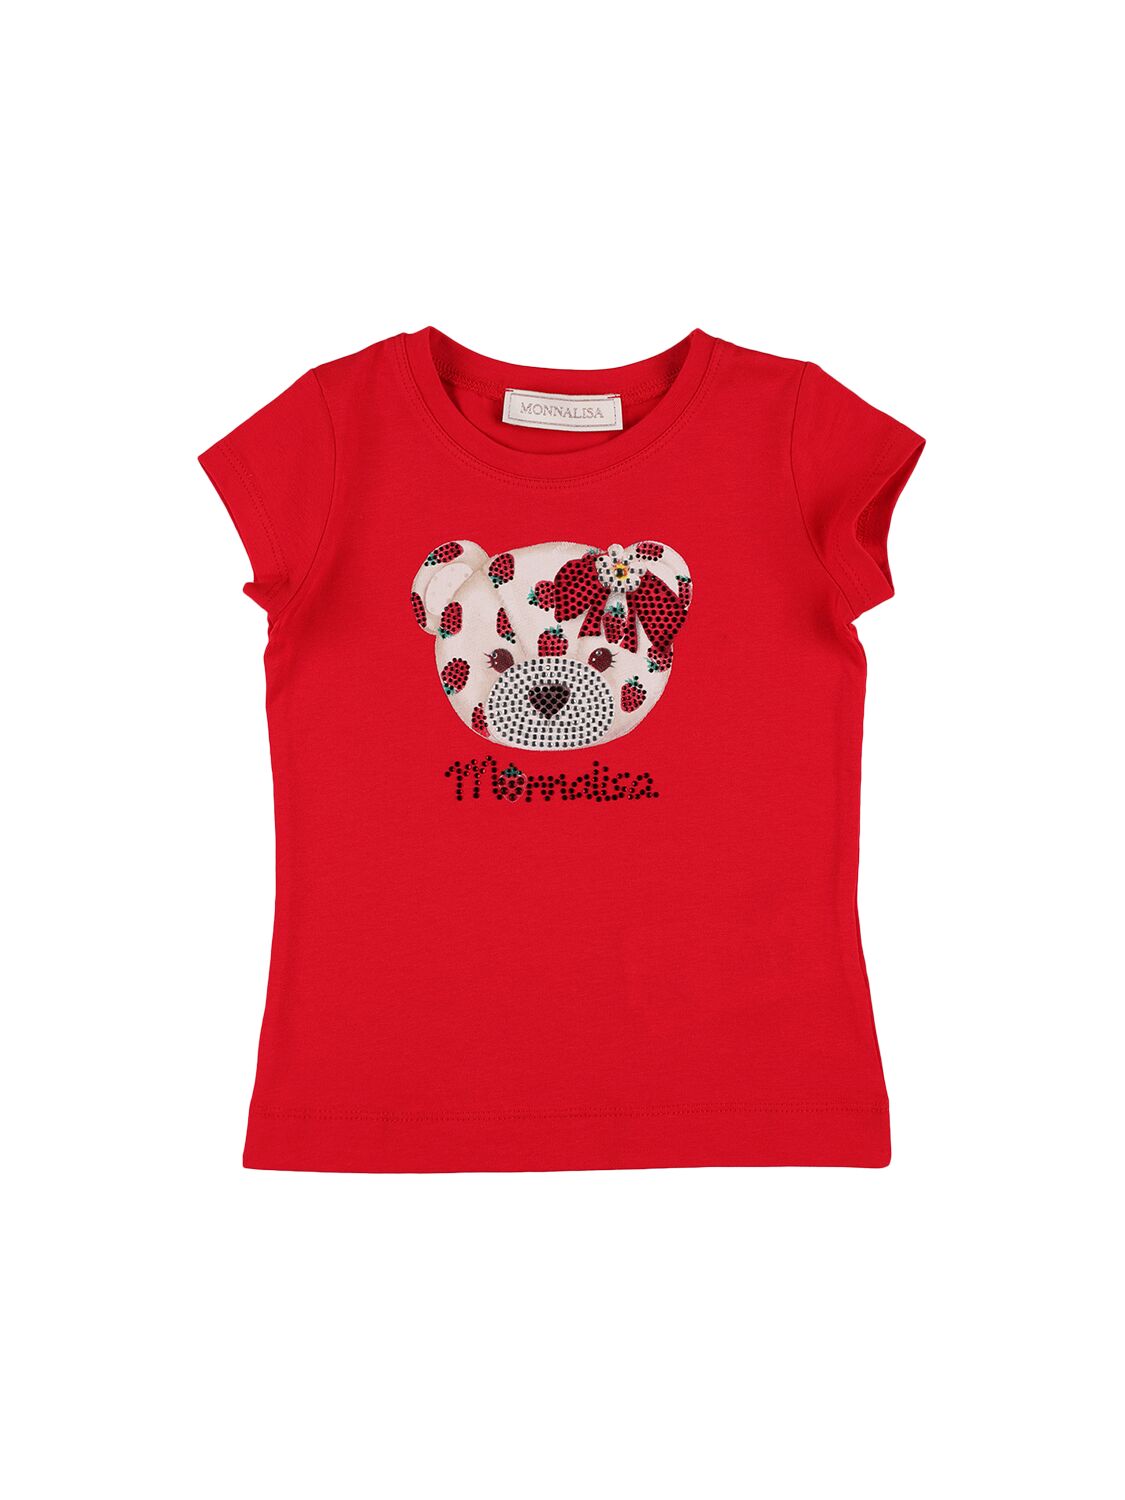 Monnalisa Kids' Printed Cotton Jersey T-shirt In Red